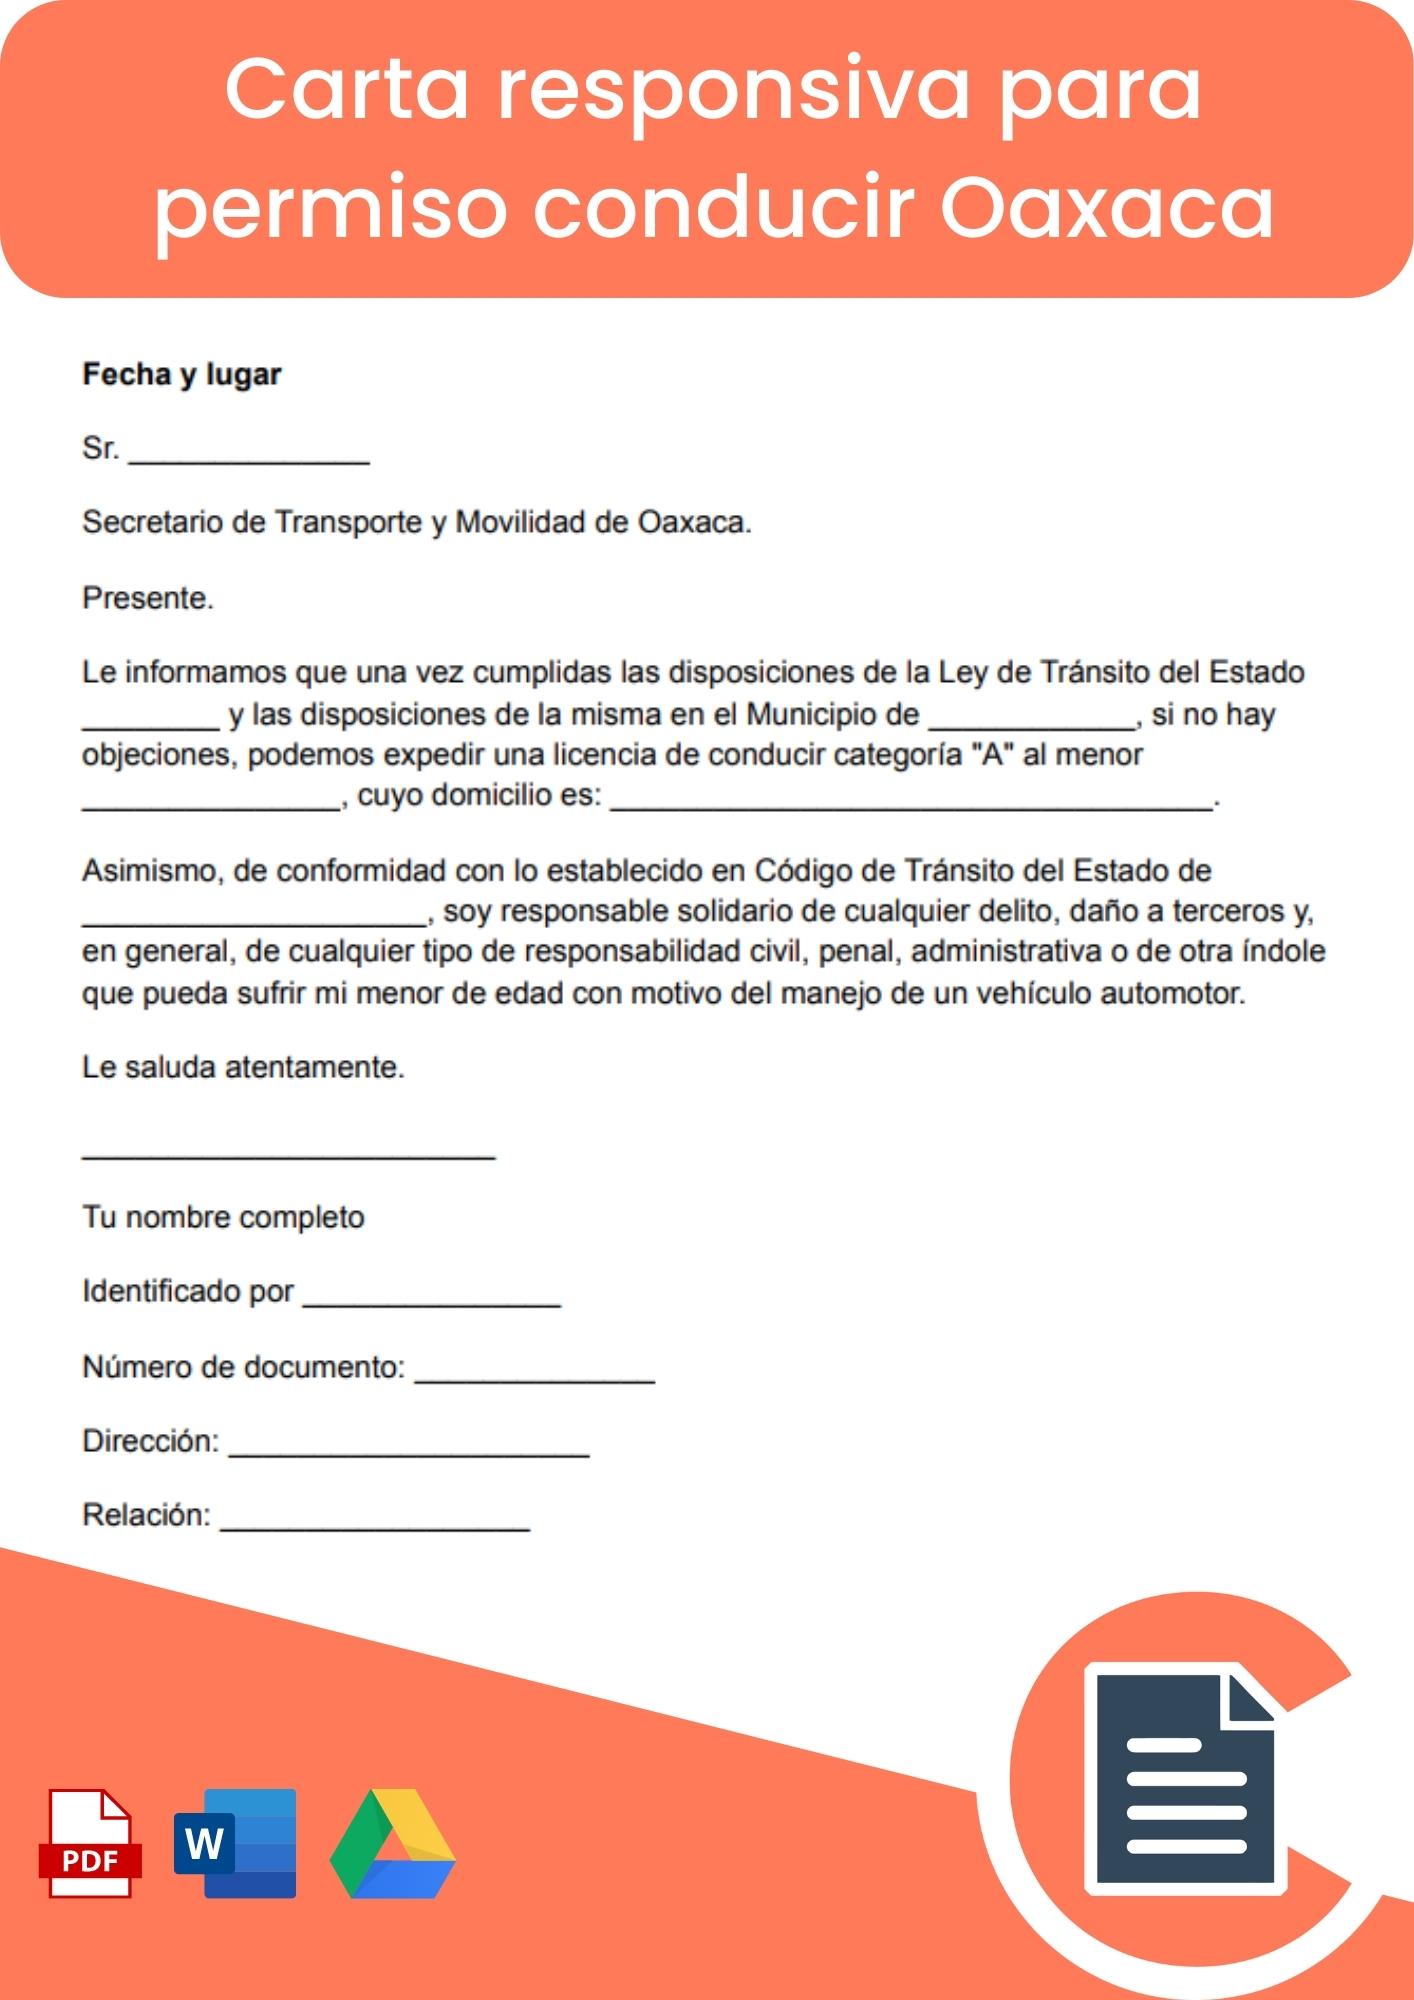 Carta responsiva para permiso conducir Oaxaca